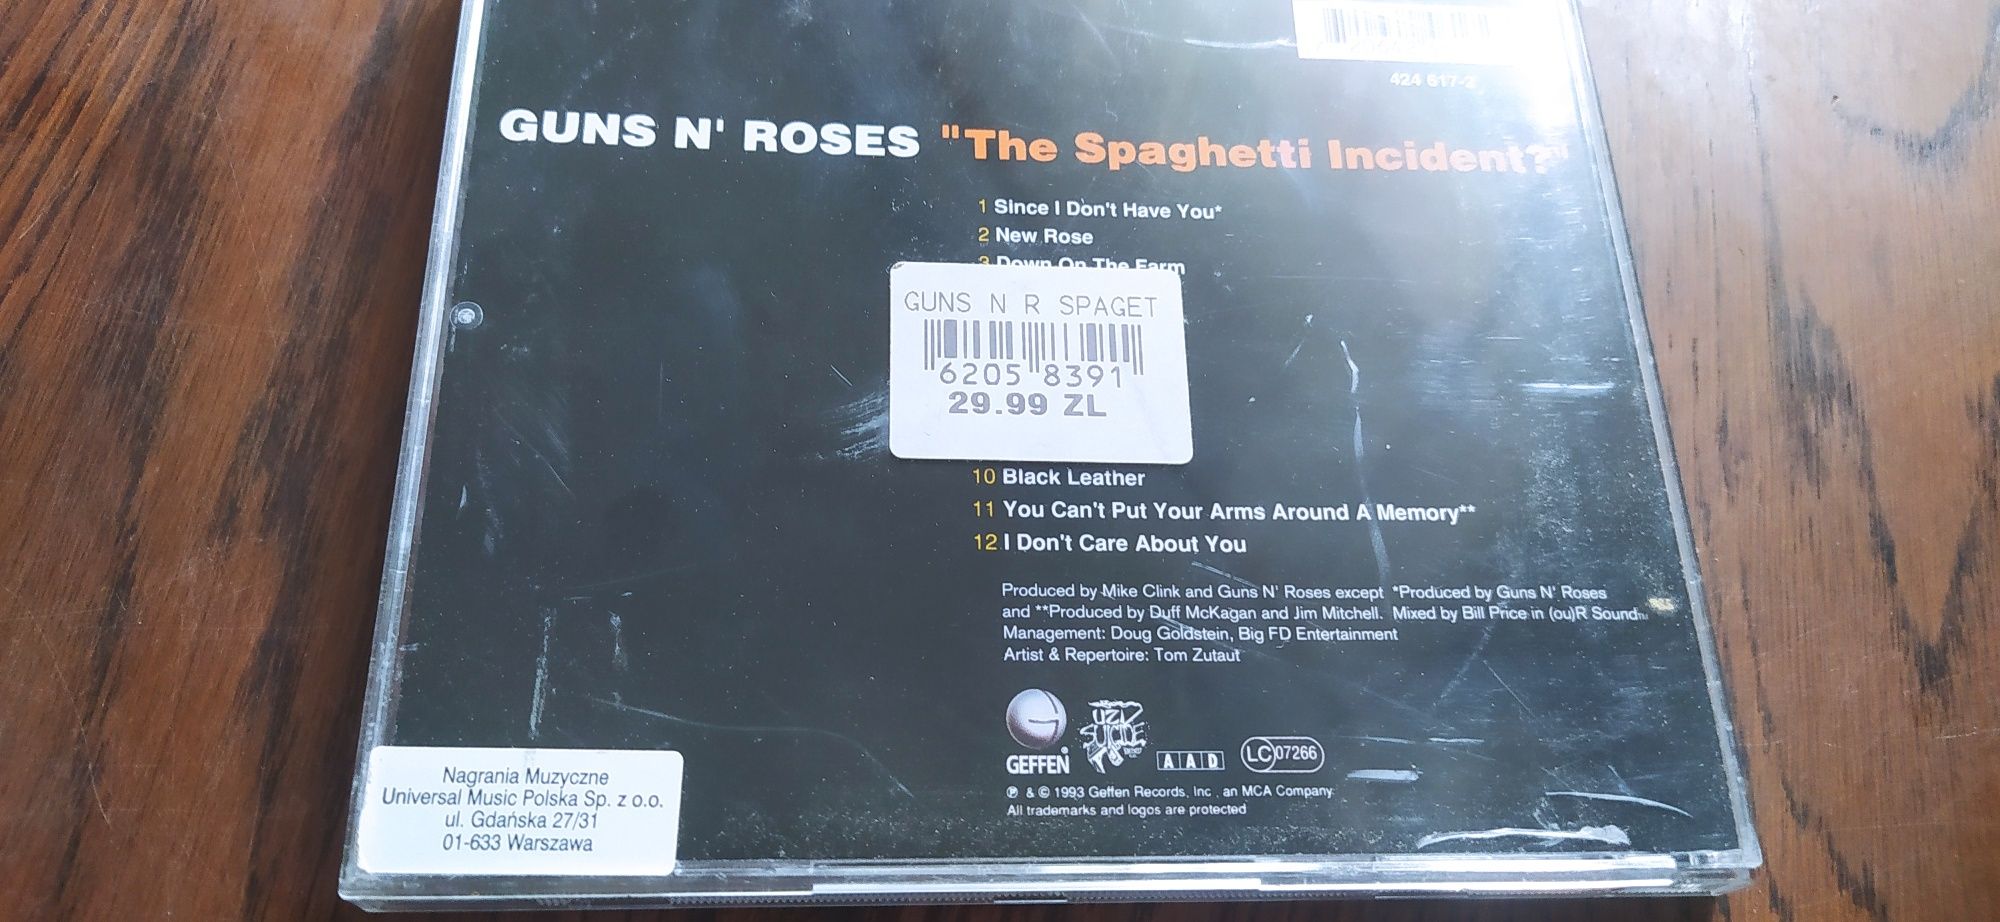 Guns n' roses The Spaghetti Incydent? CD